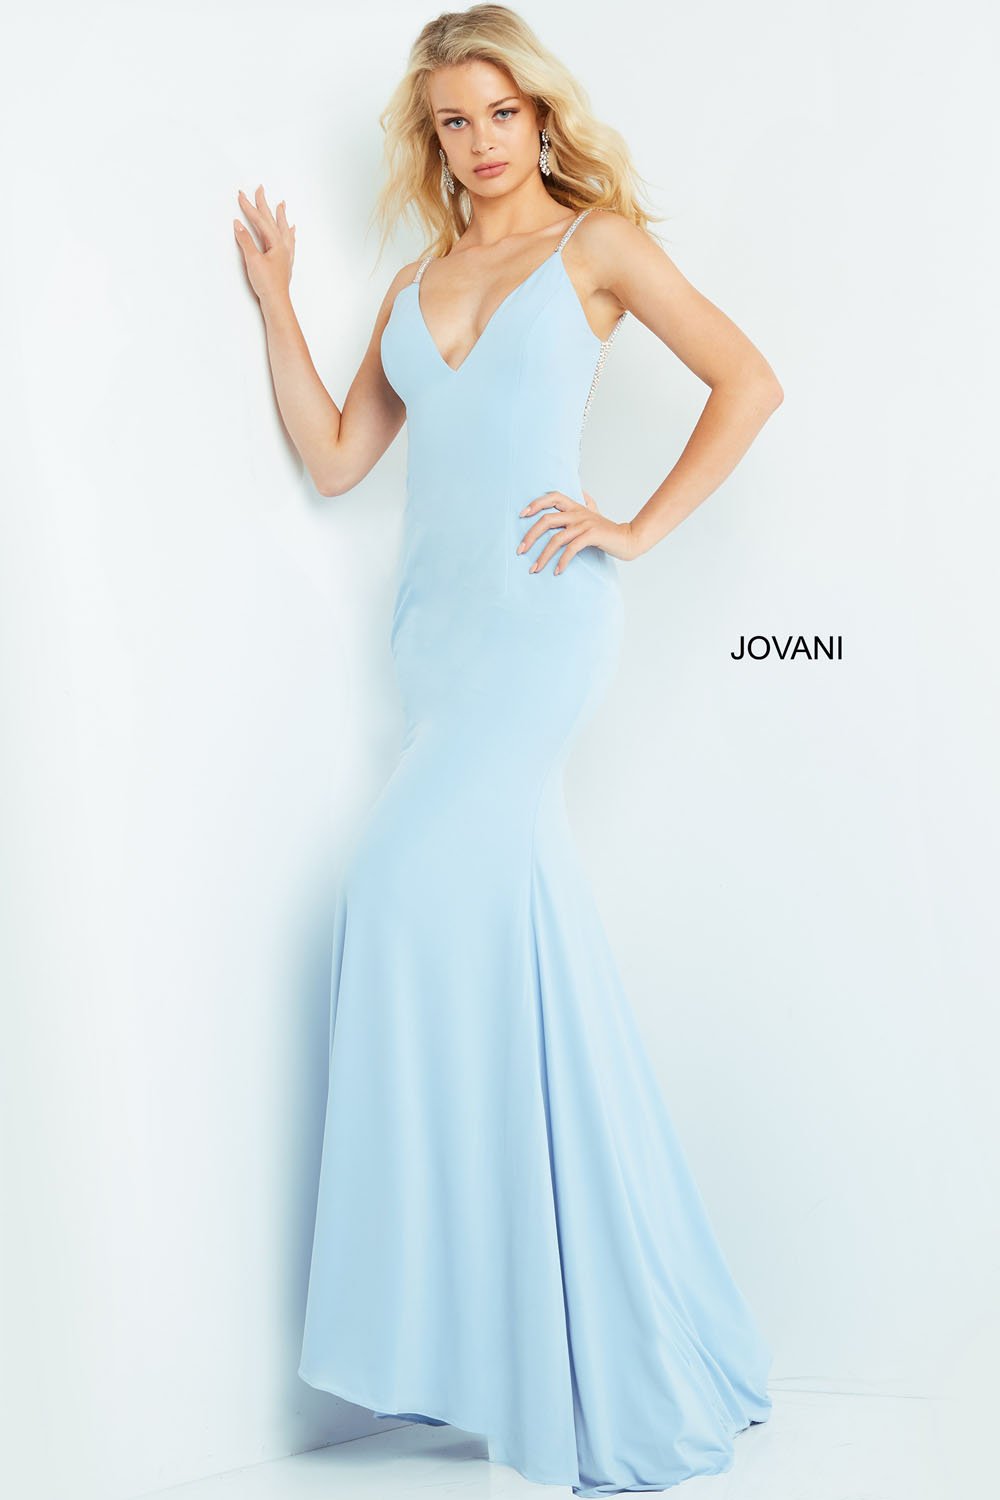 Jovani 07297 Lightblue prom dresses images.